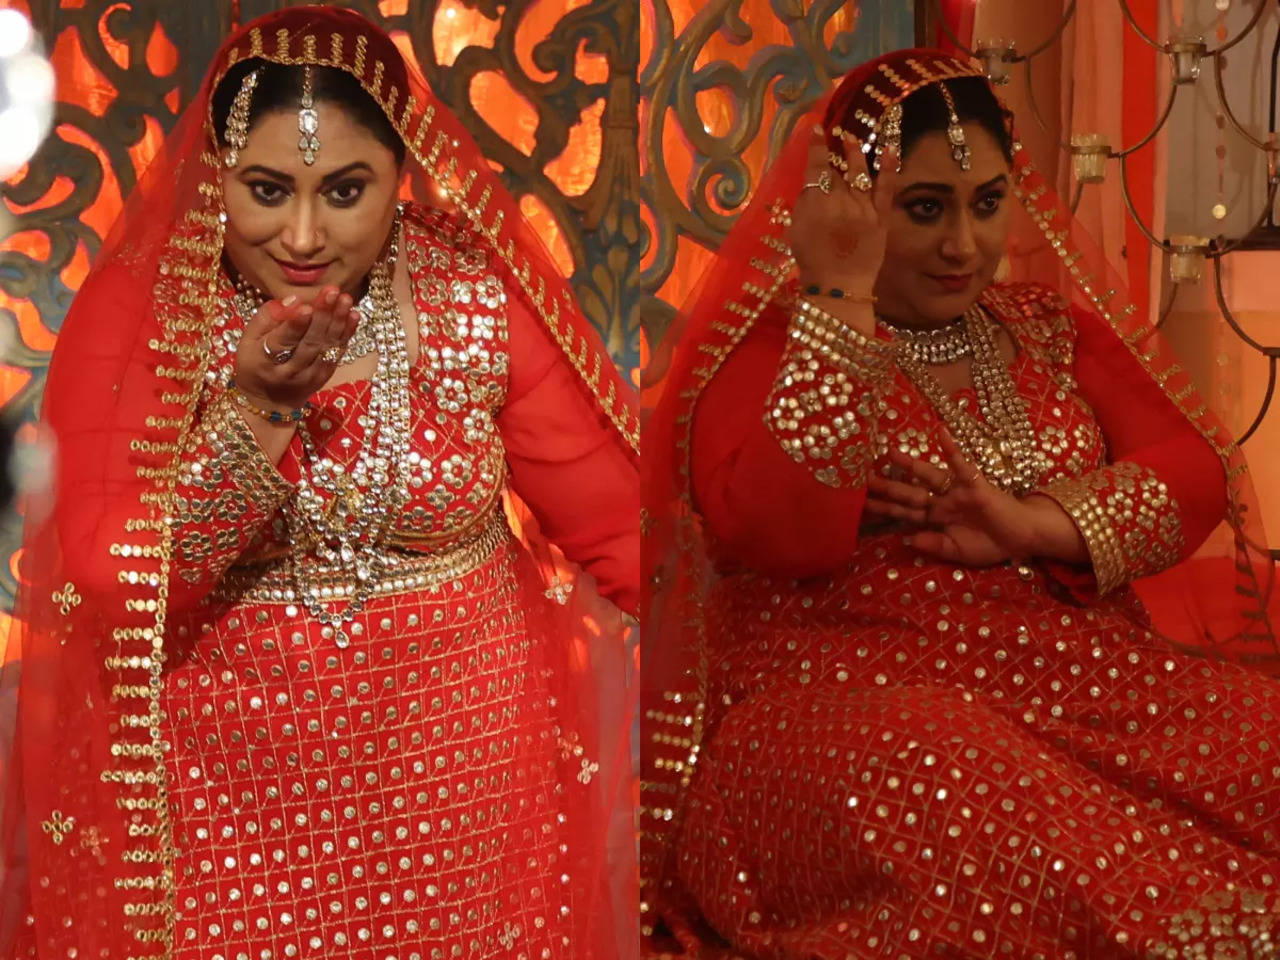 Agga Agga Sunbai Kay Mhanta Sasubai Mahaepisode: Sukanya Mone performs  Mujra to pay tribute to veteran actress Rekha - Times of India